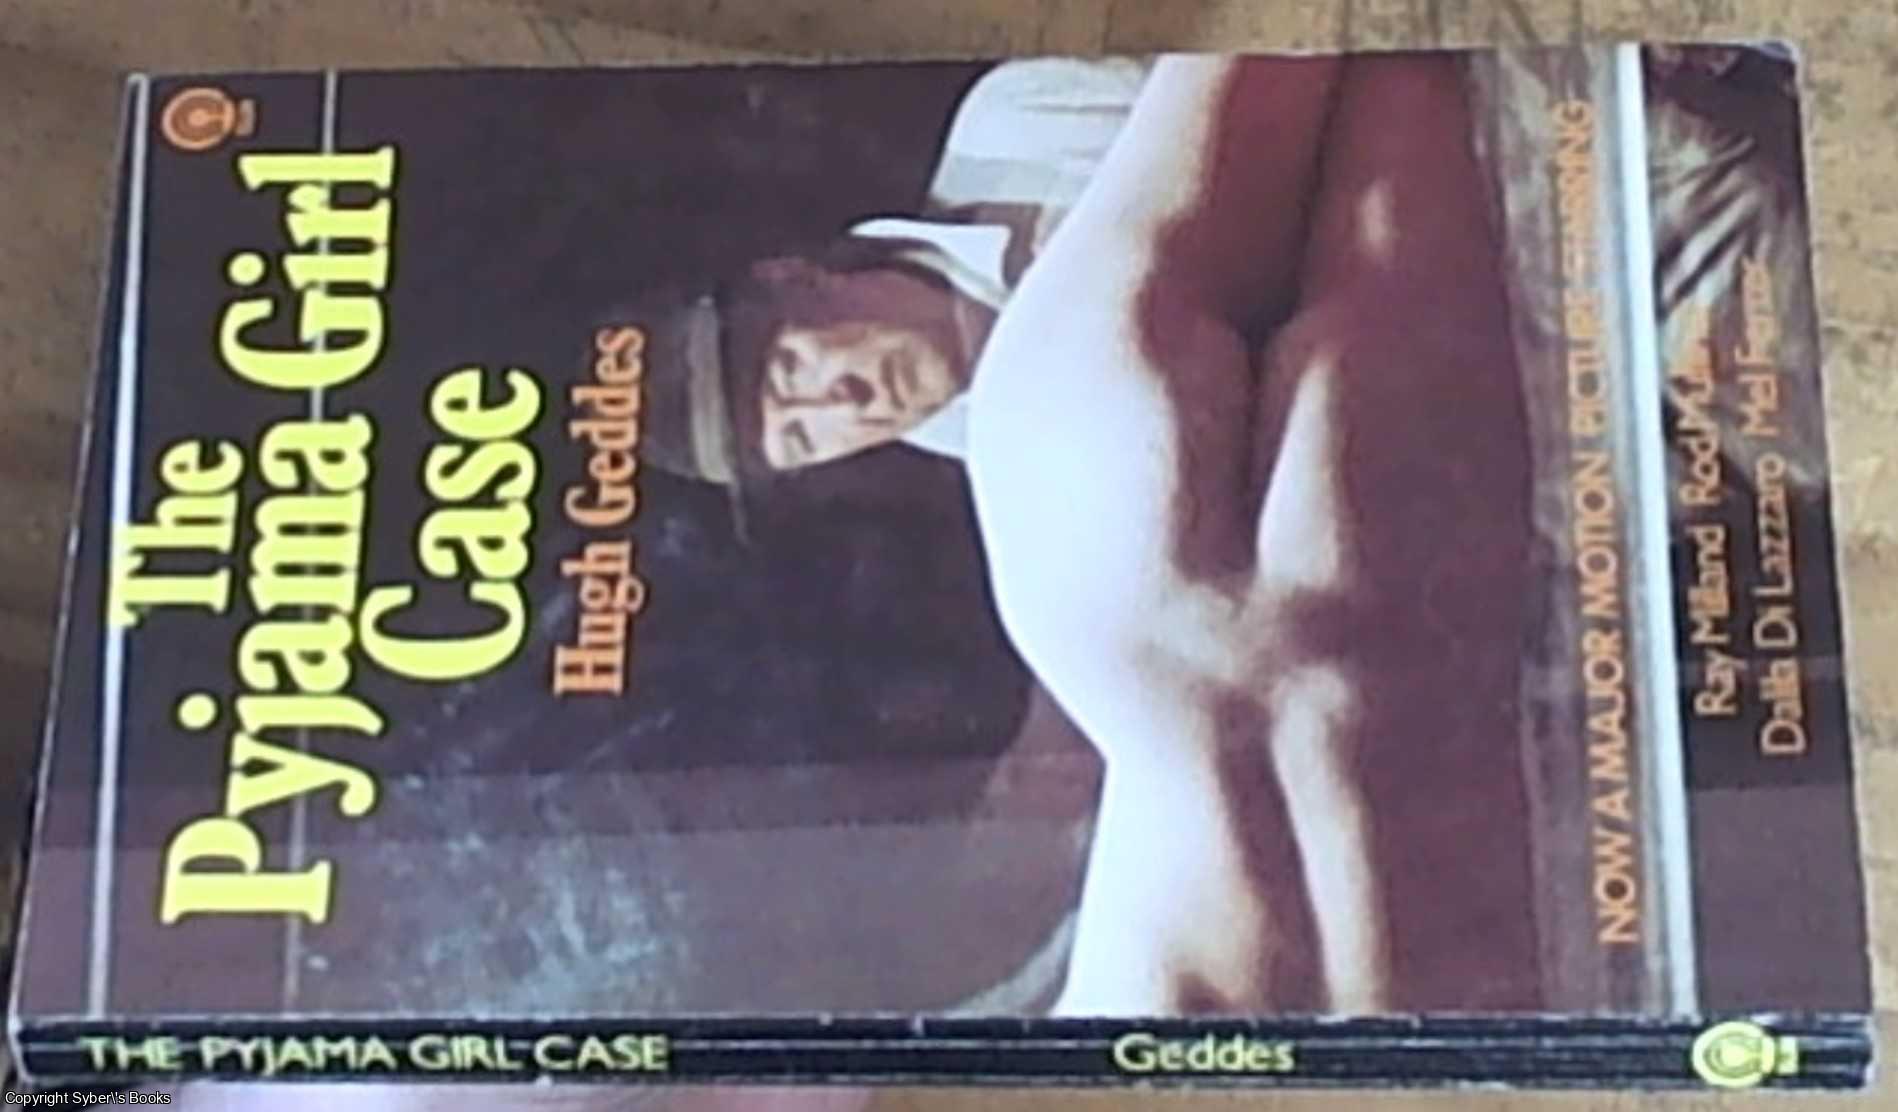 Geddes, Hugh - The Pyjama Girl Case